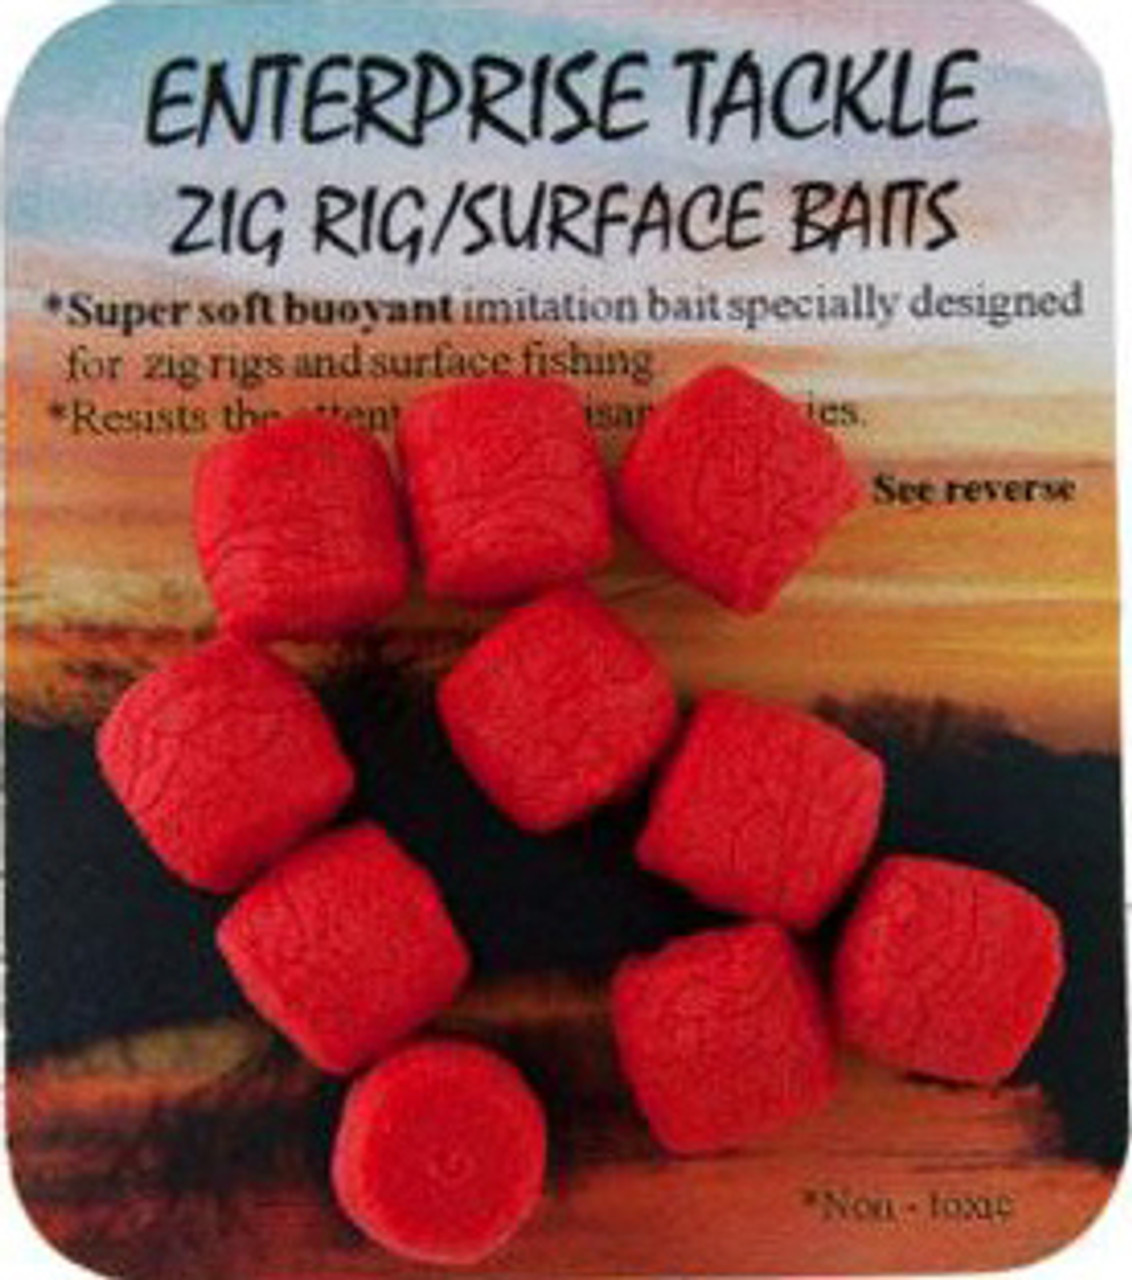 Enterprise Tackle Red Zig Rig/Surface Bait